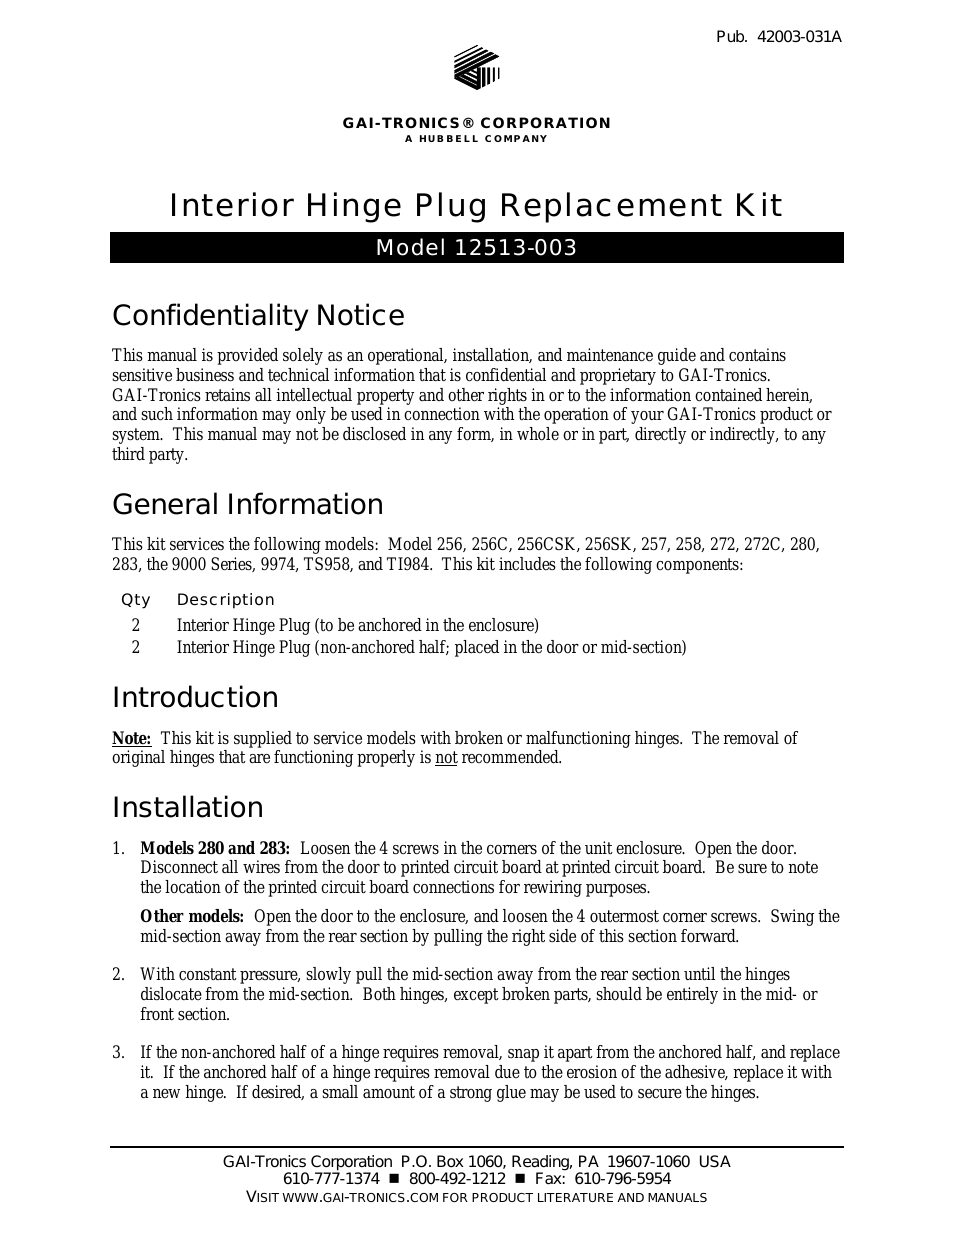 12513-003 Repl. Hinge Kit Interior Plugs